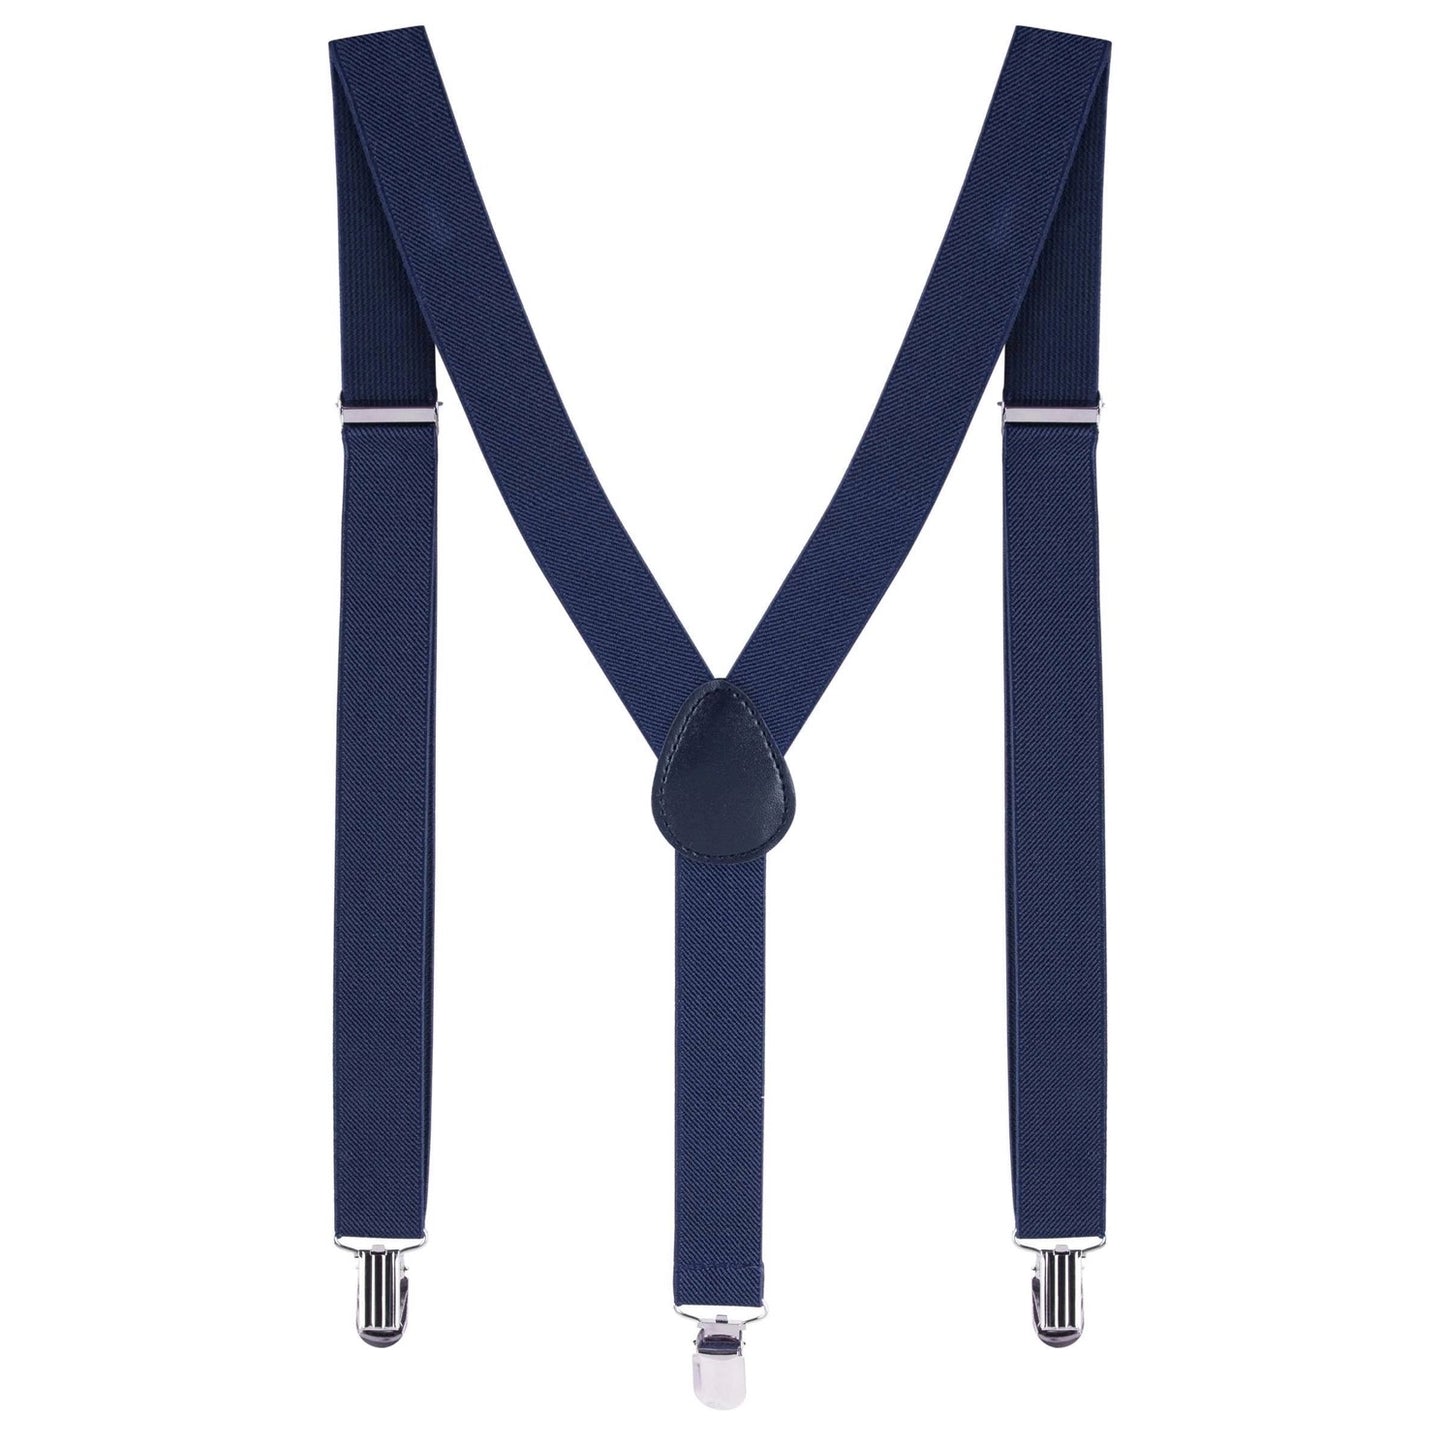 Bradley Boys Suspenders - Navy - One Size